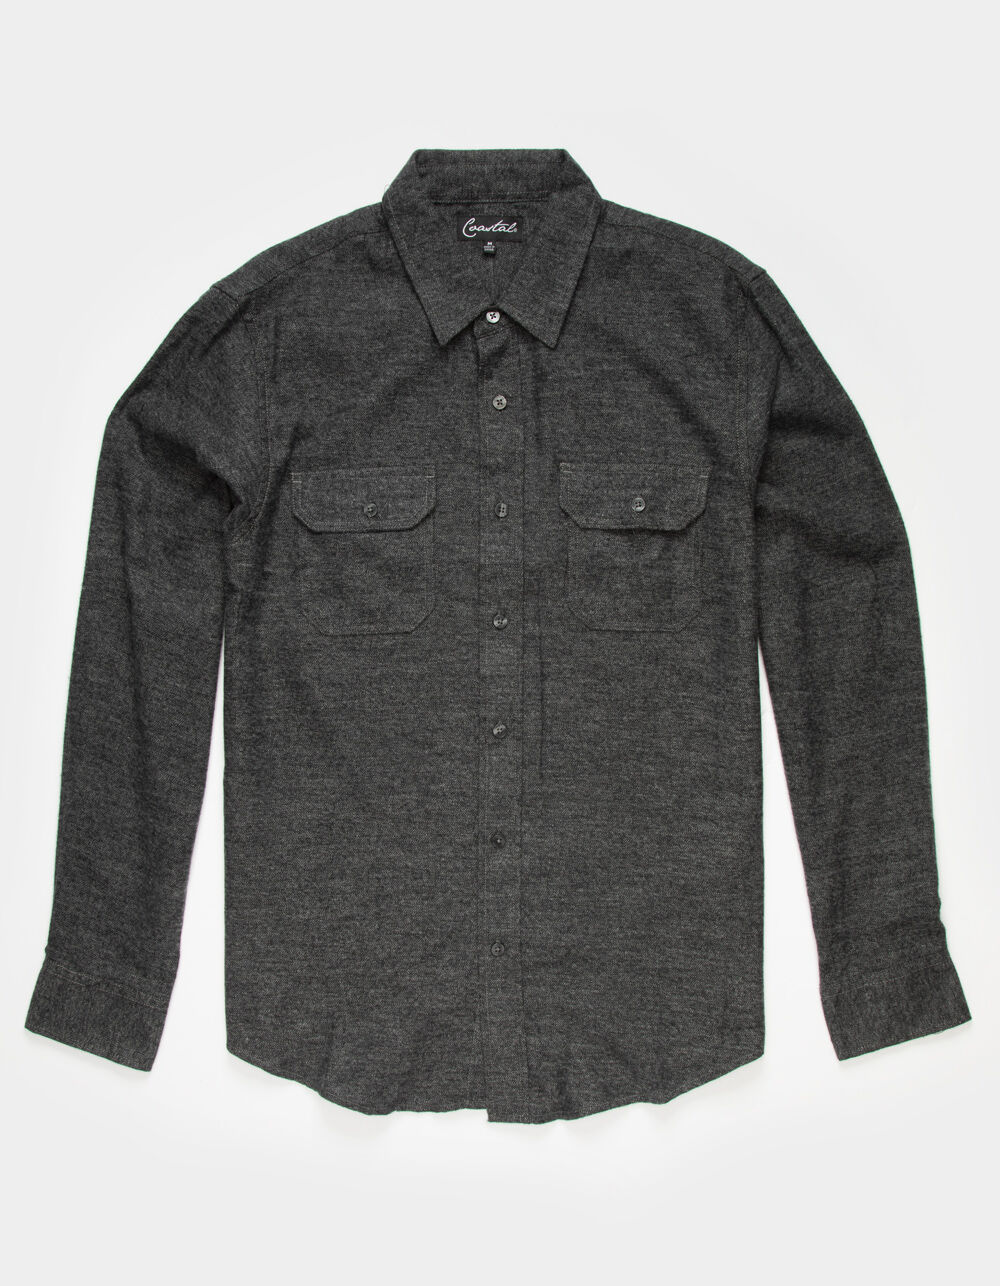 COASTAL Herringbone Mens Charcoal Flannel Shirt - CHARCOAL | Tillys